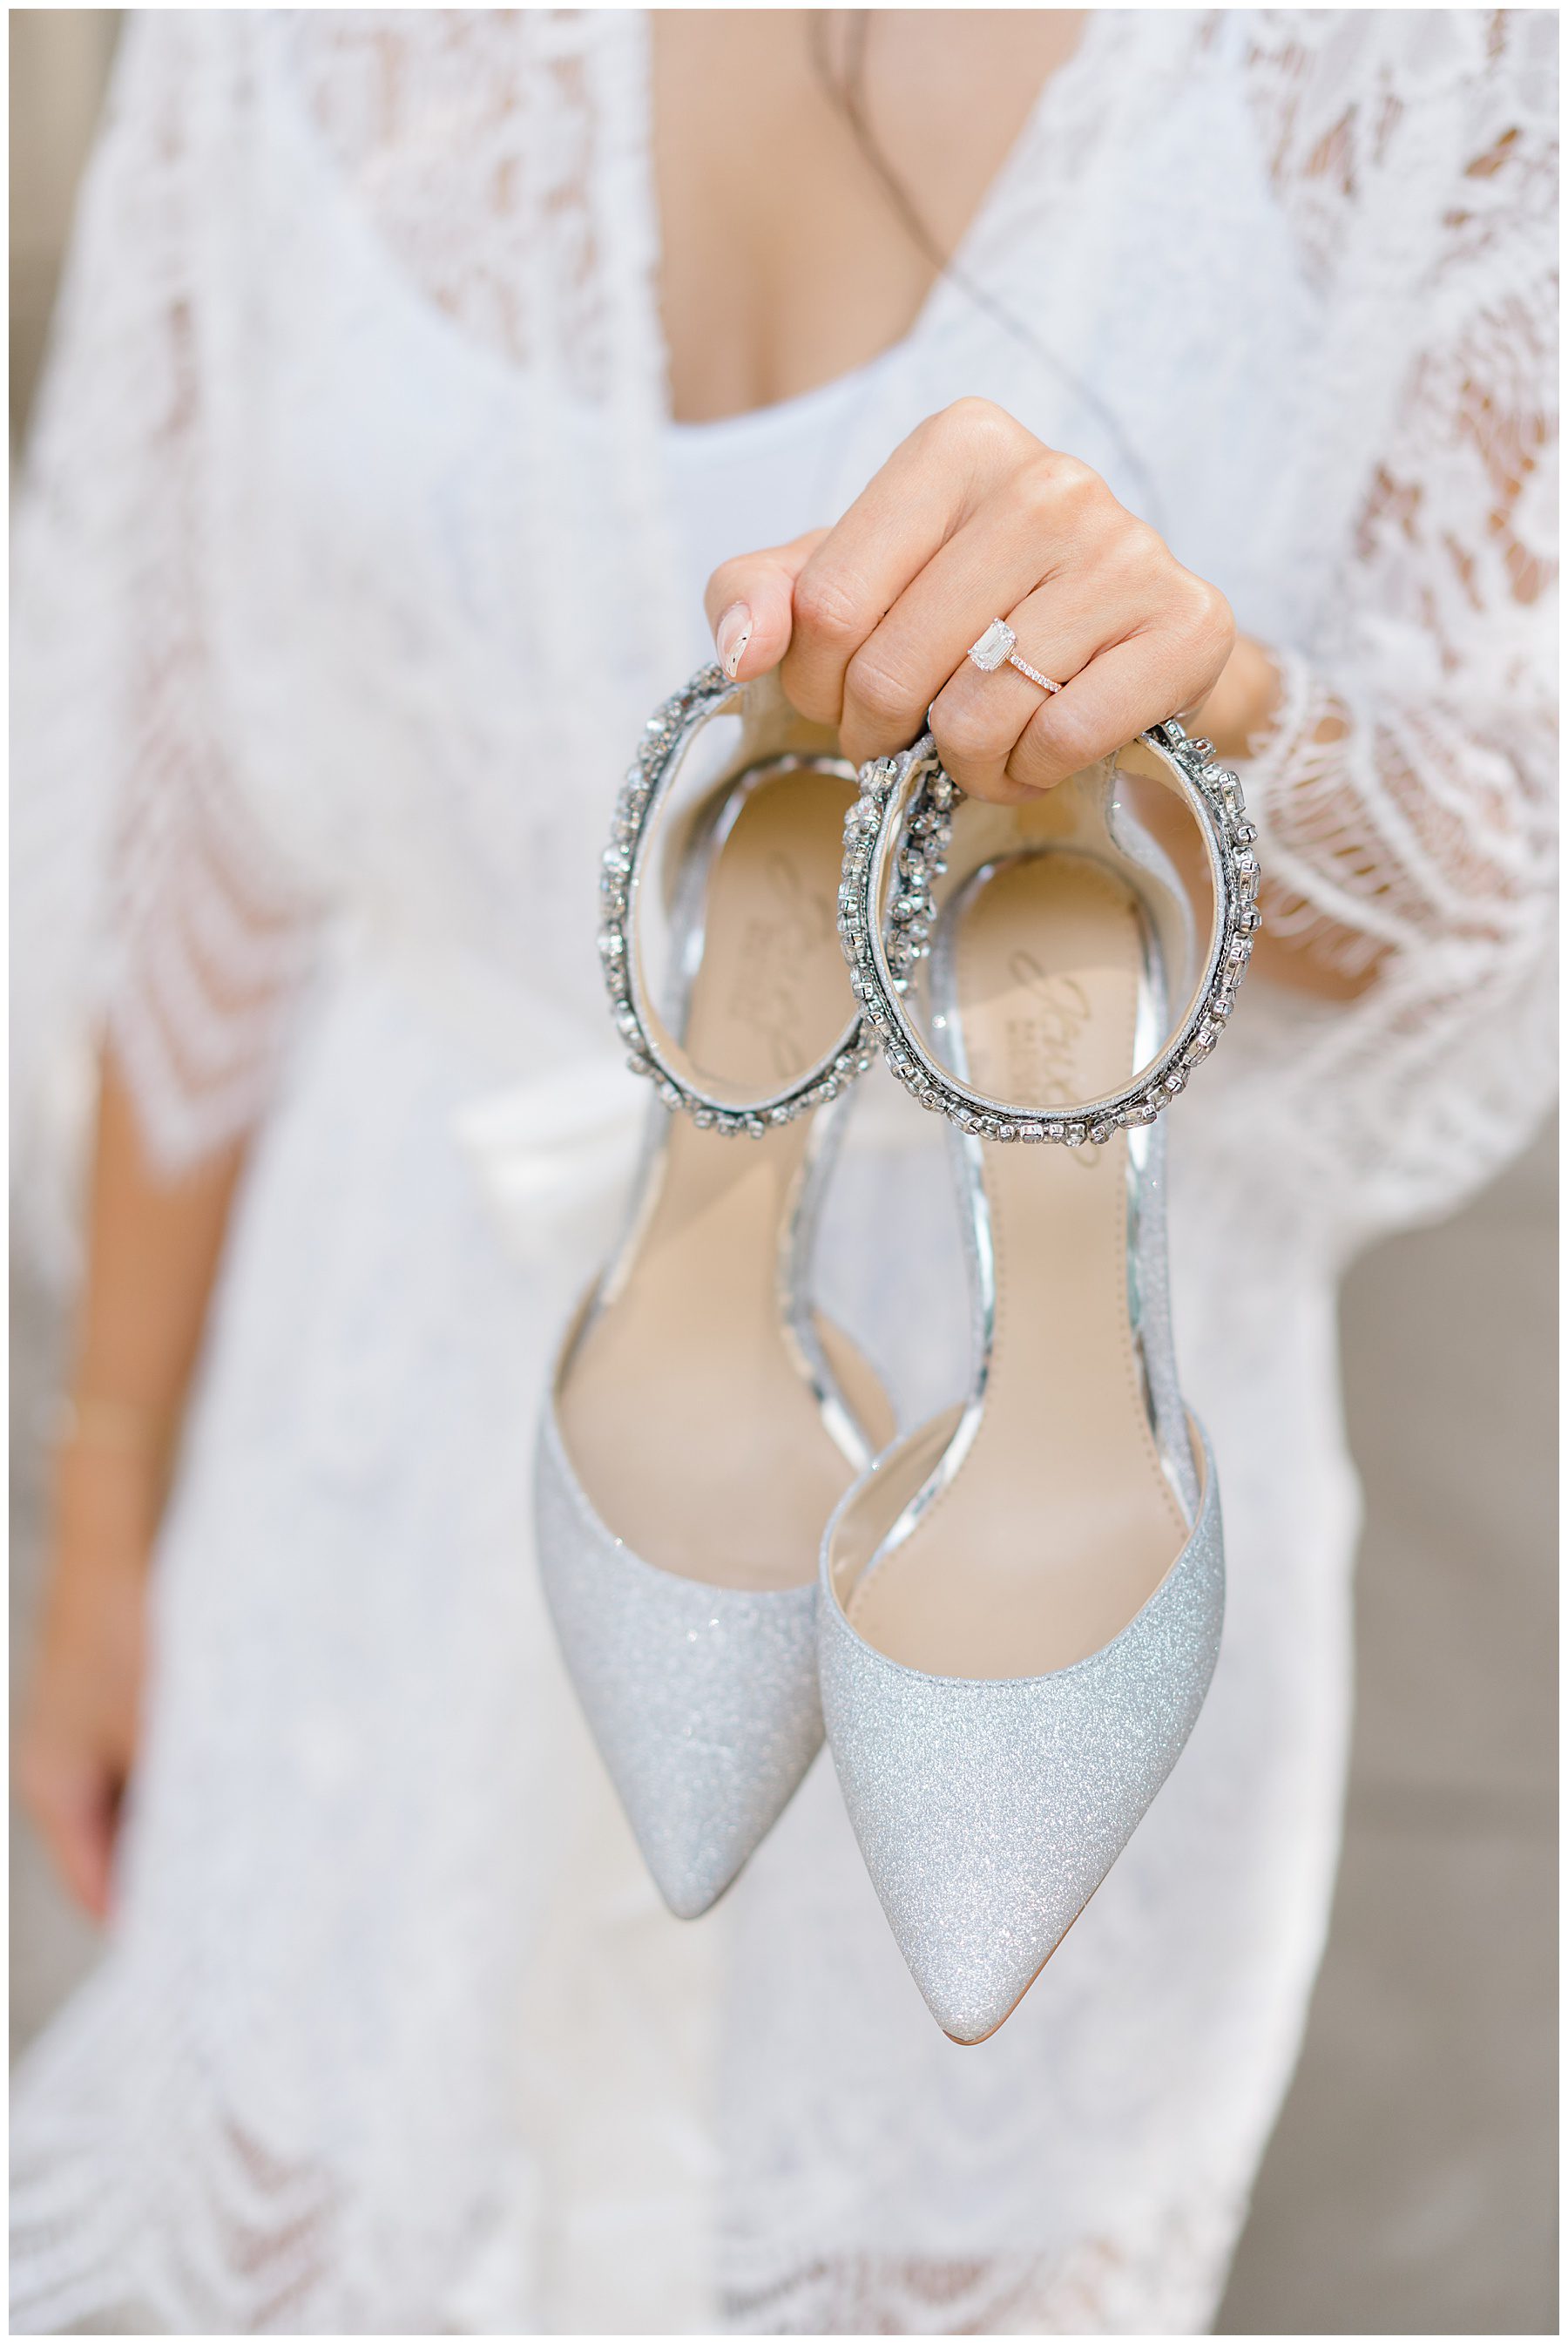 bide holds up wedding shoes